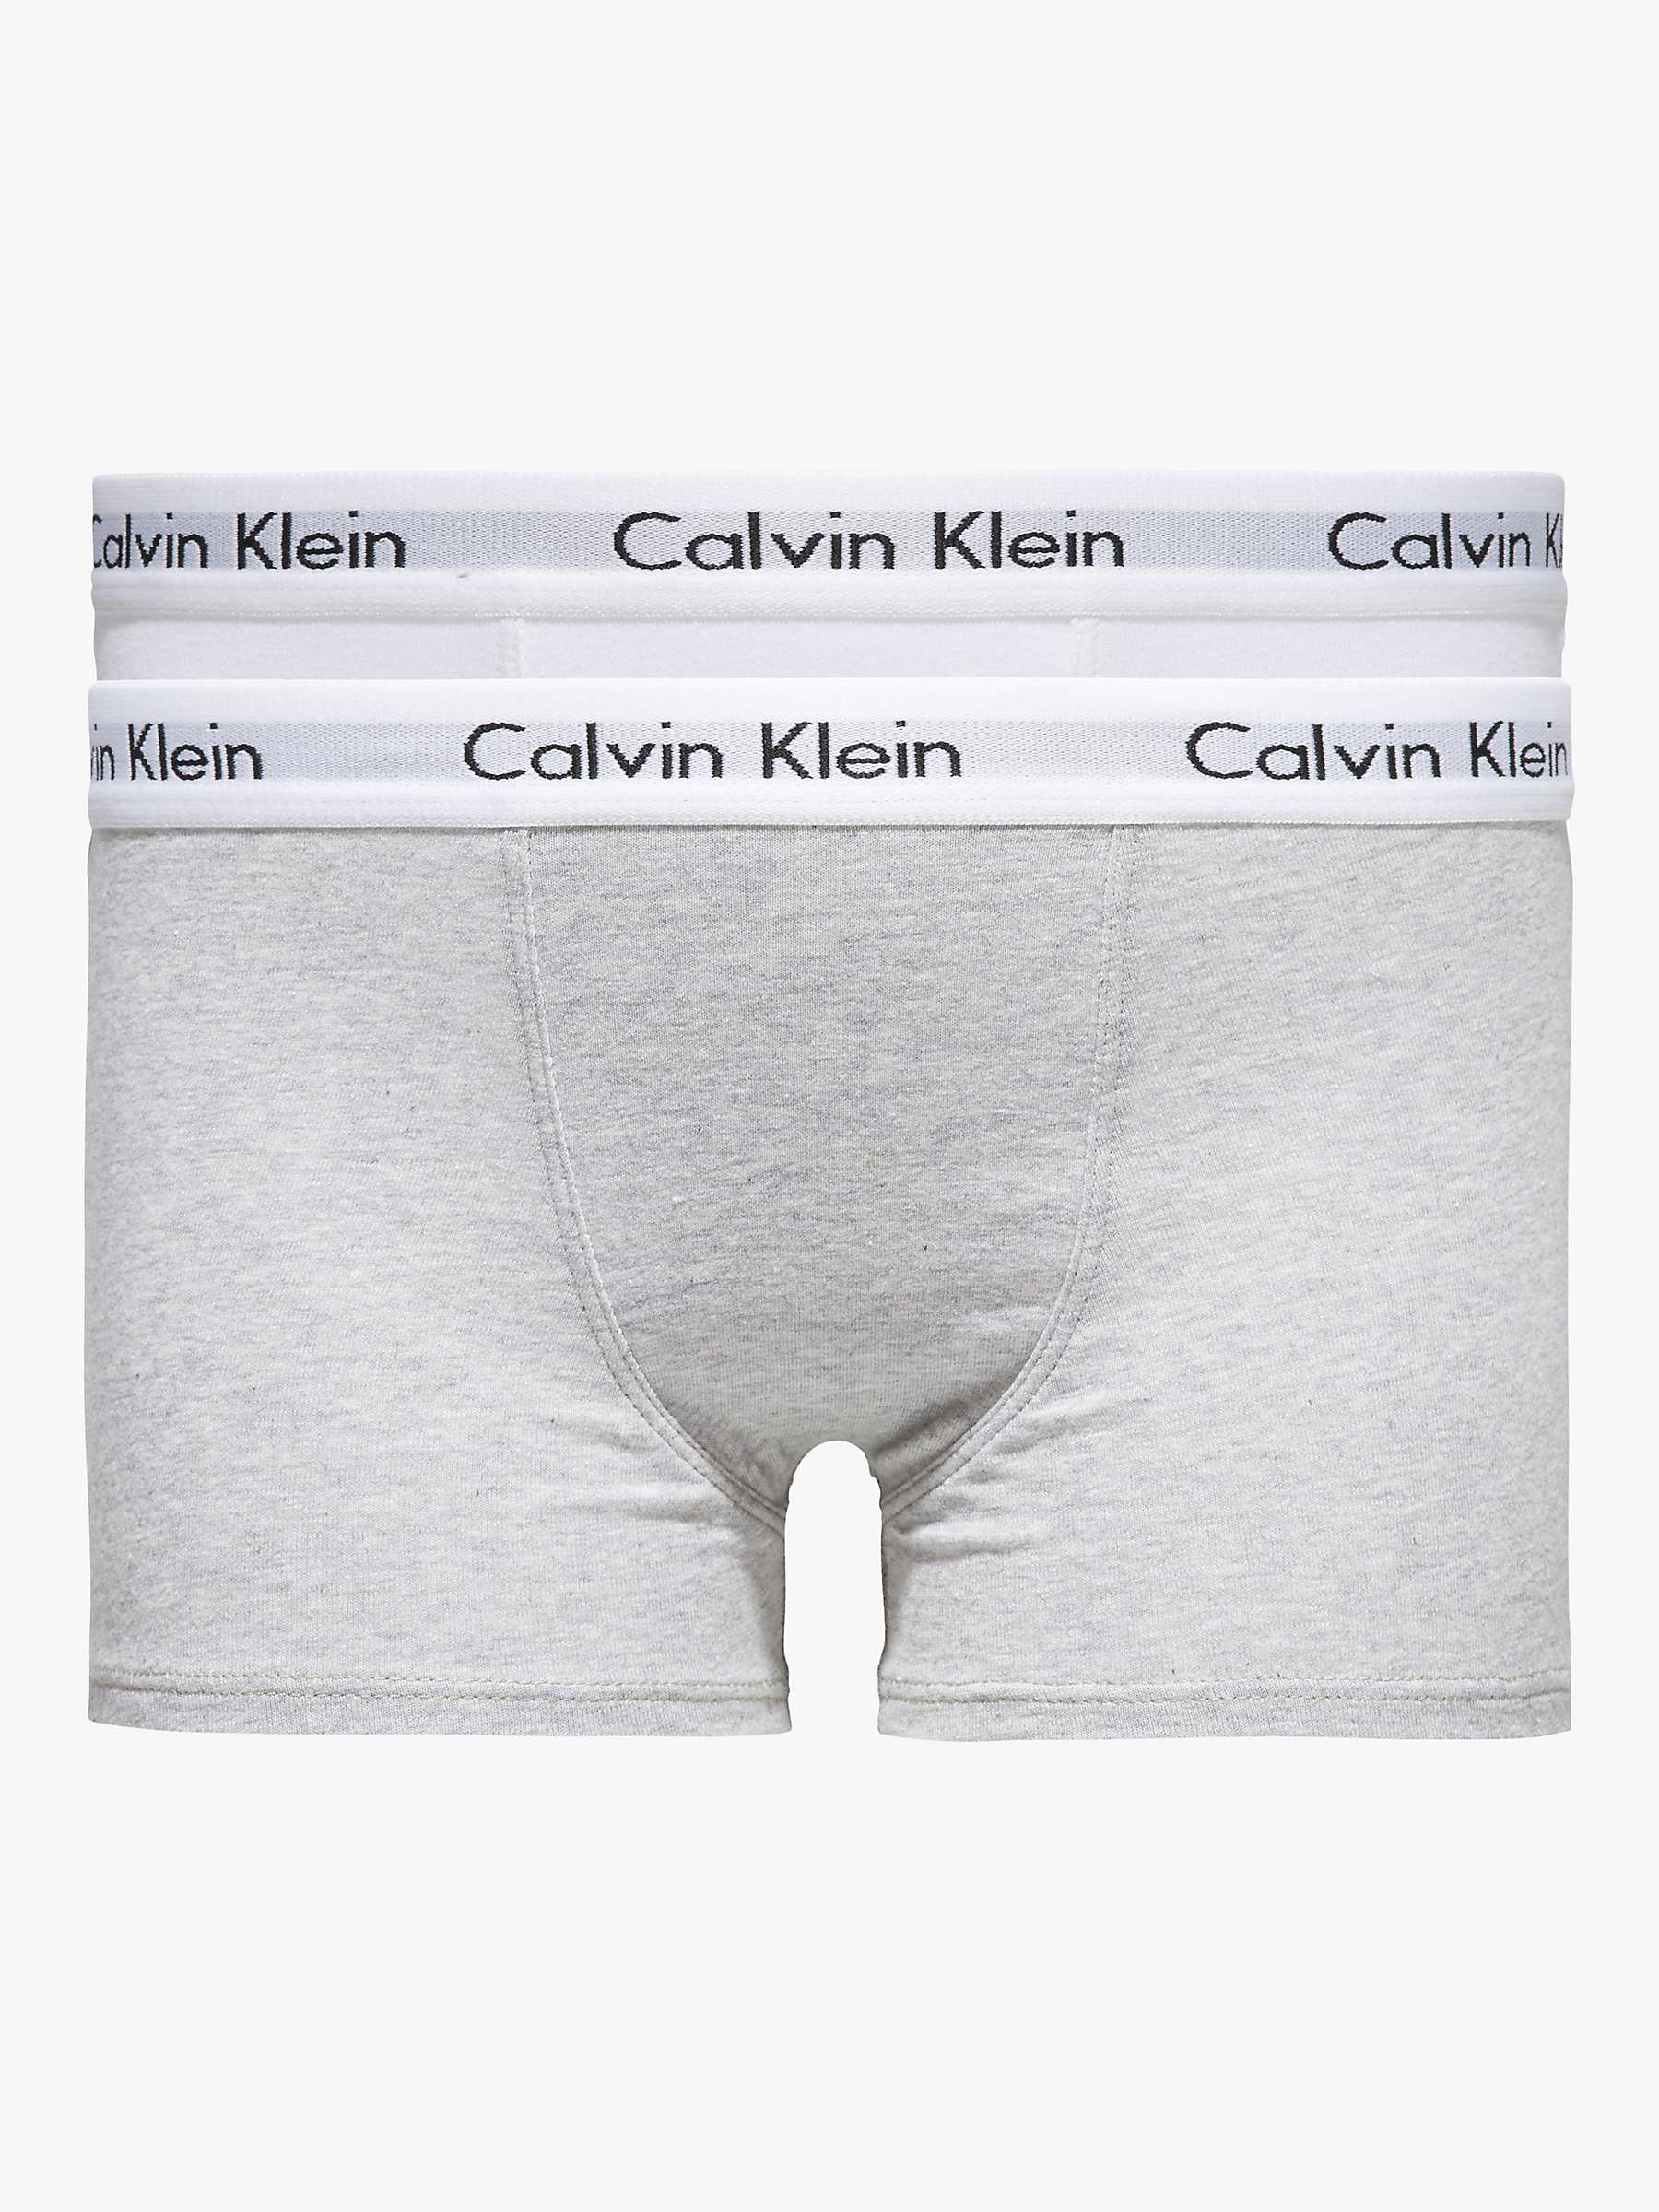 Buy Calvin Klein Kids' Trunks, Pack of 2, Grey/White Online at johnlewis.com